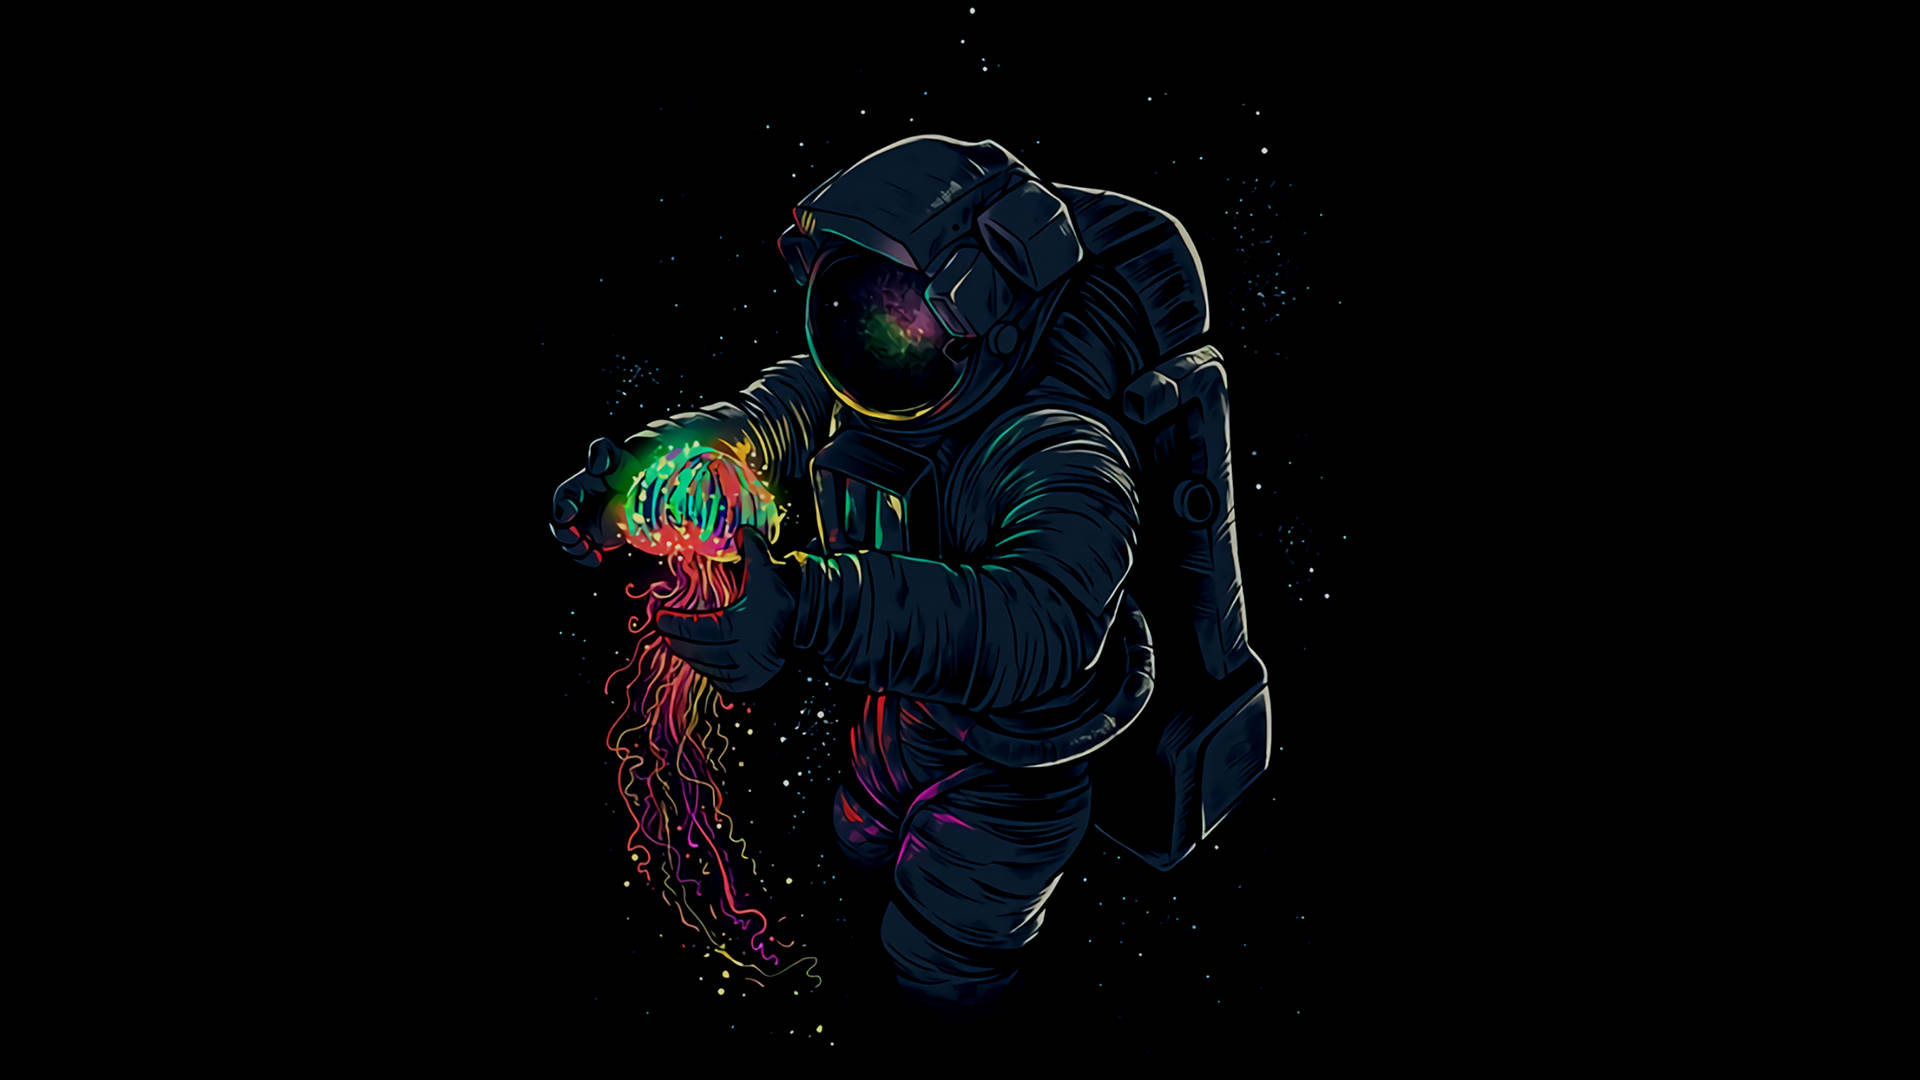 Astronaut Aesthetic With Neon Jellyfish